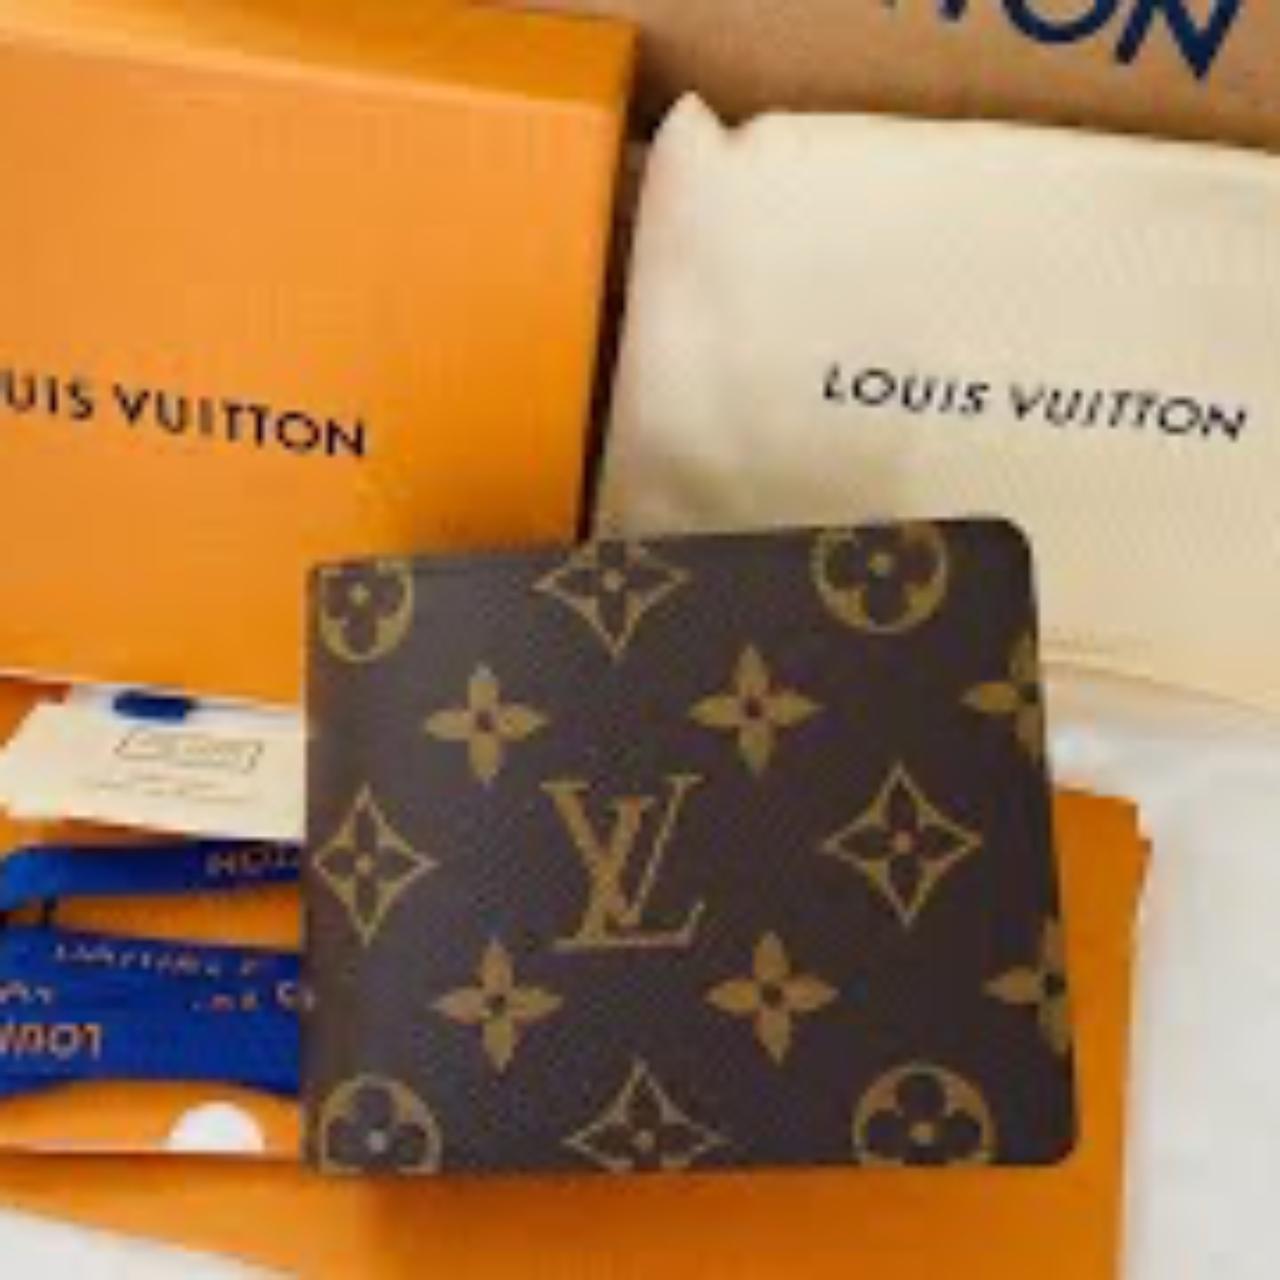 Supreme x Louis Vuitton red wallet - Depop